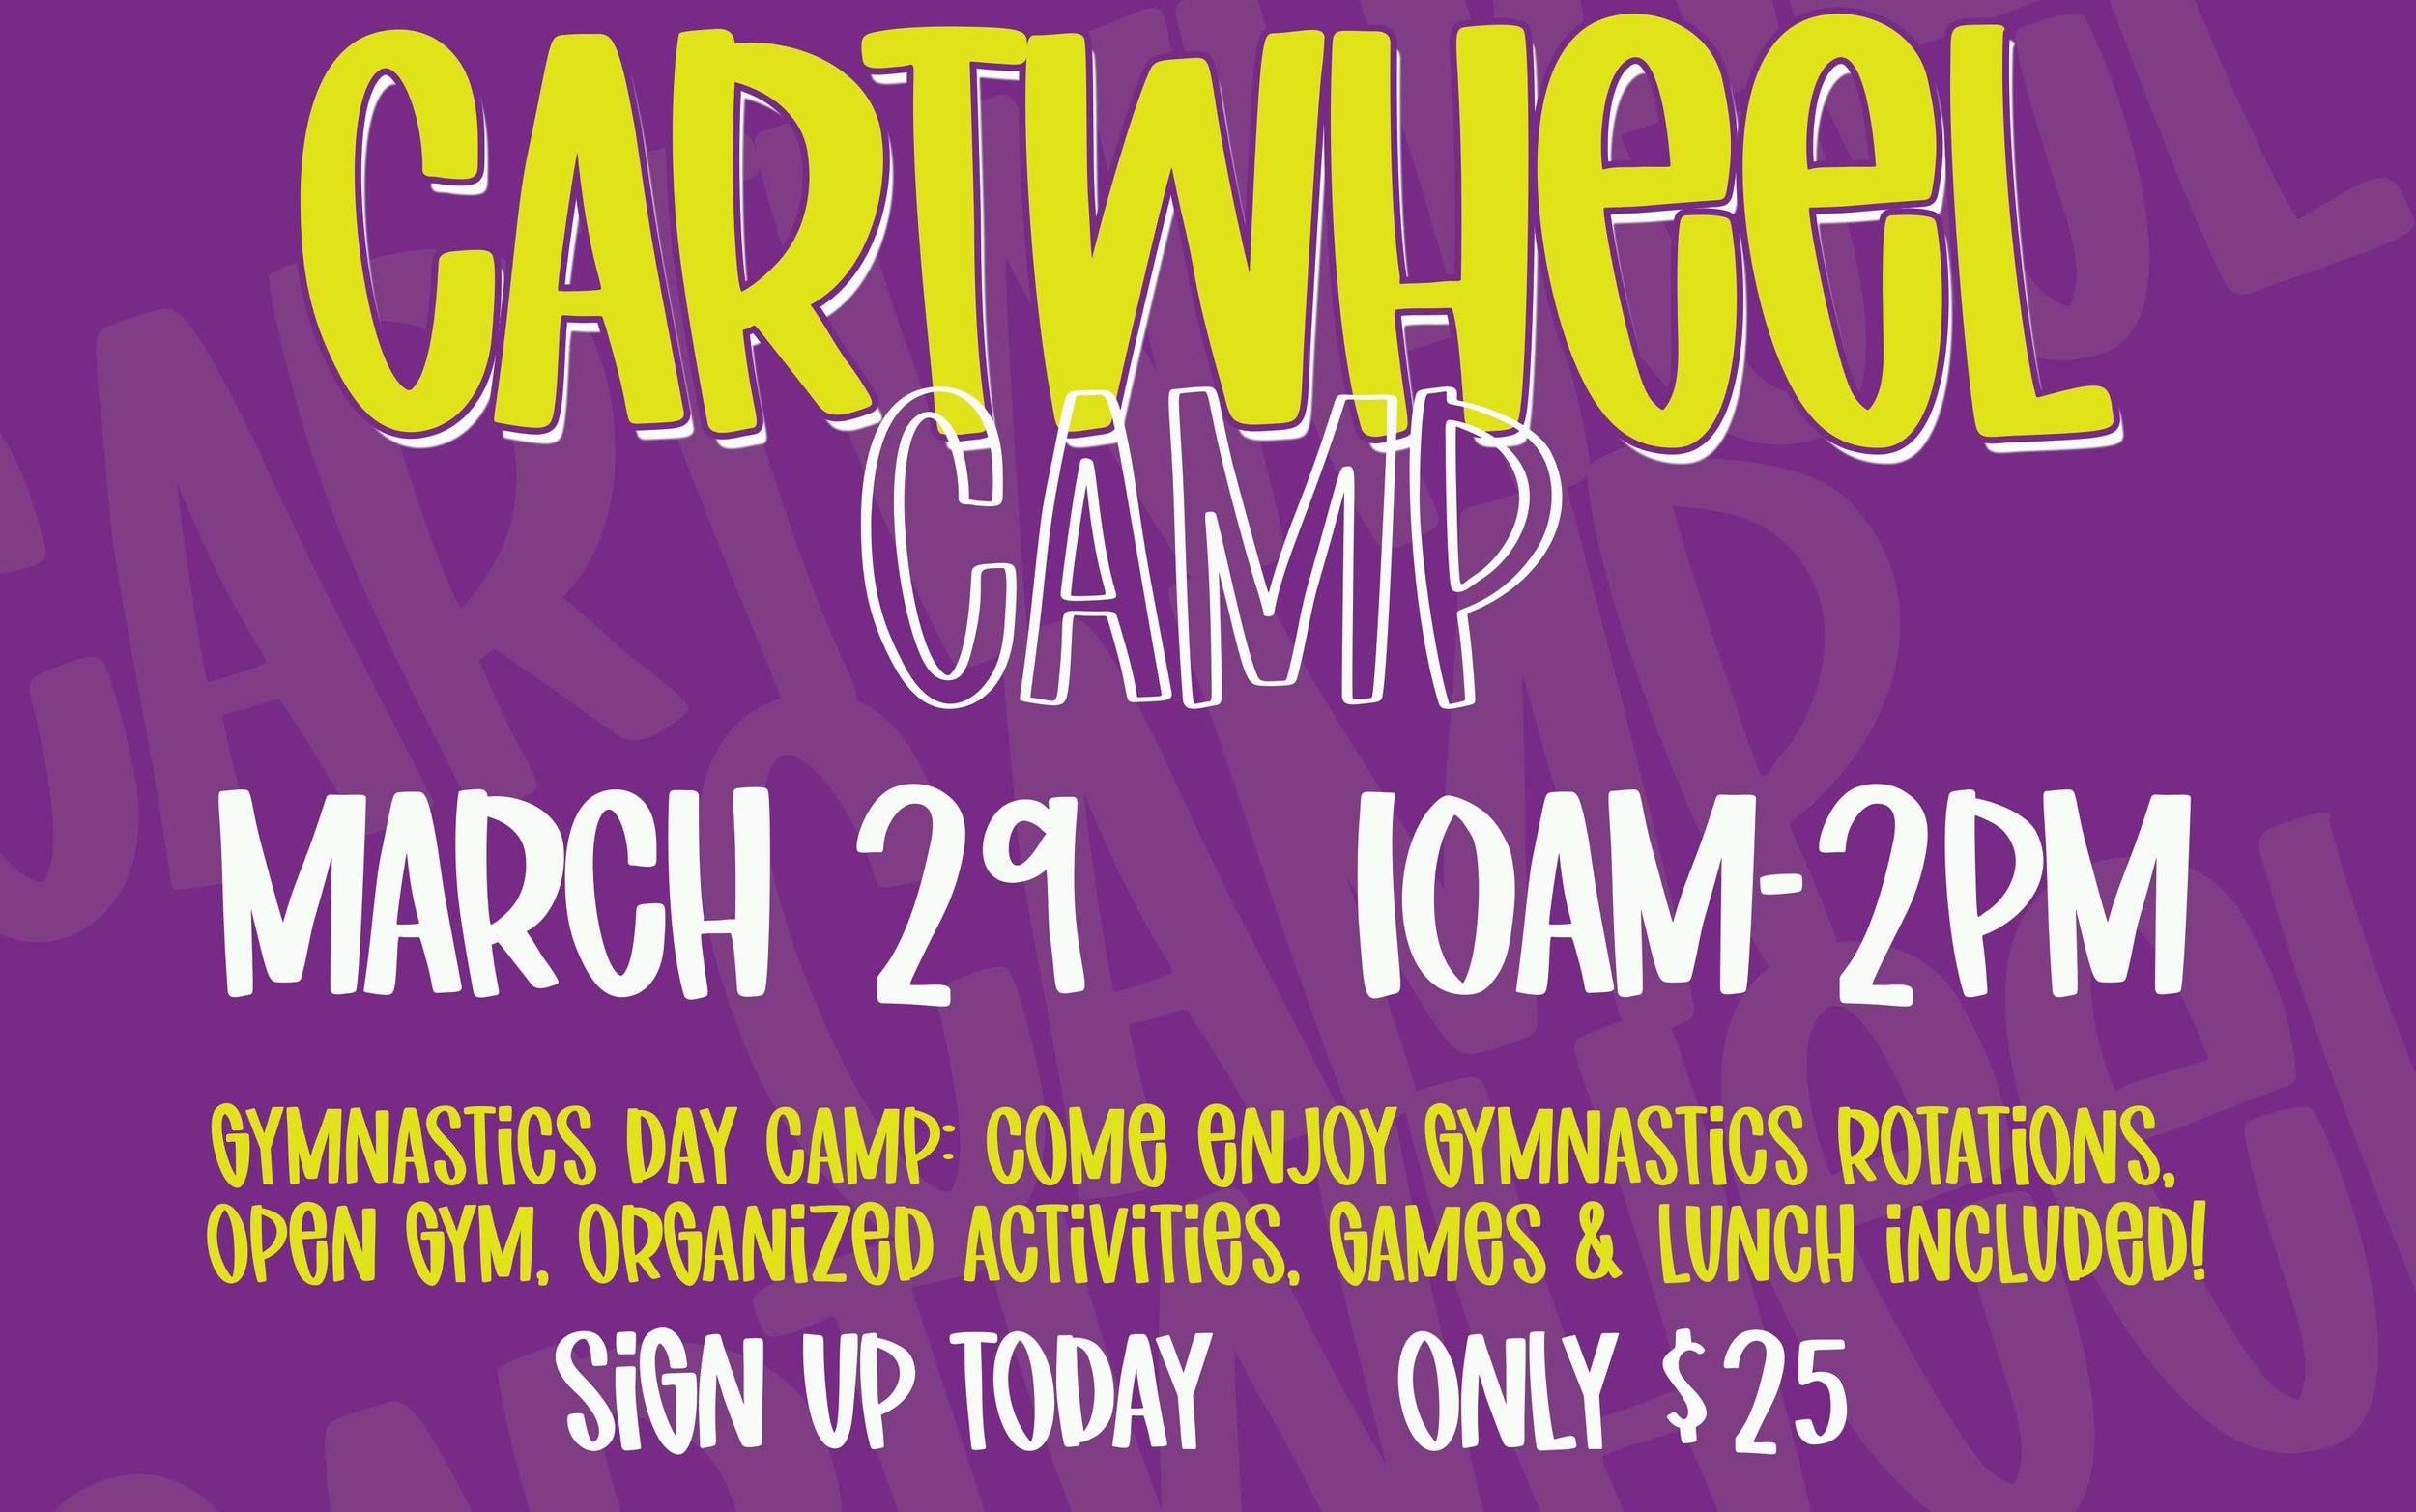 Cartwheel Camp